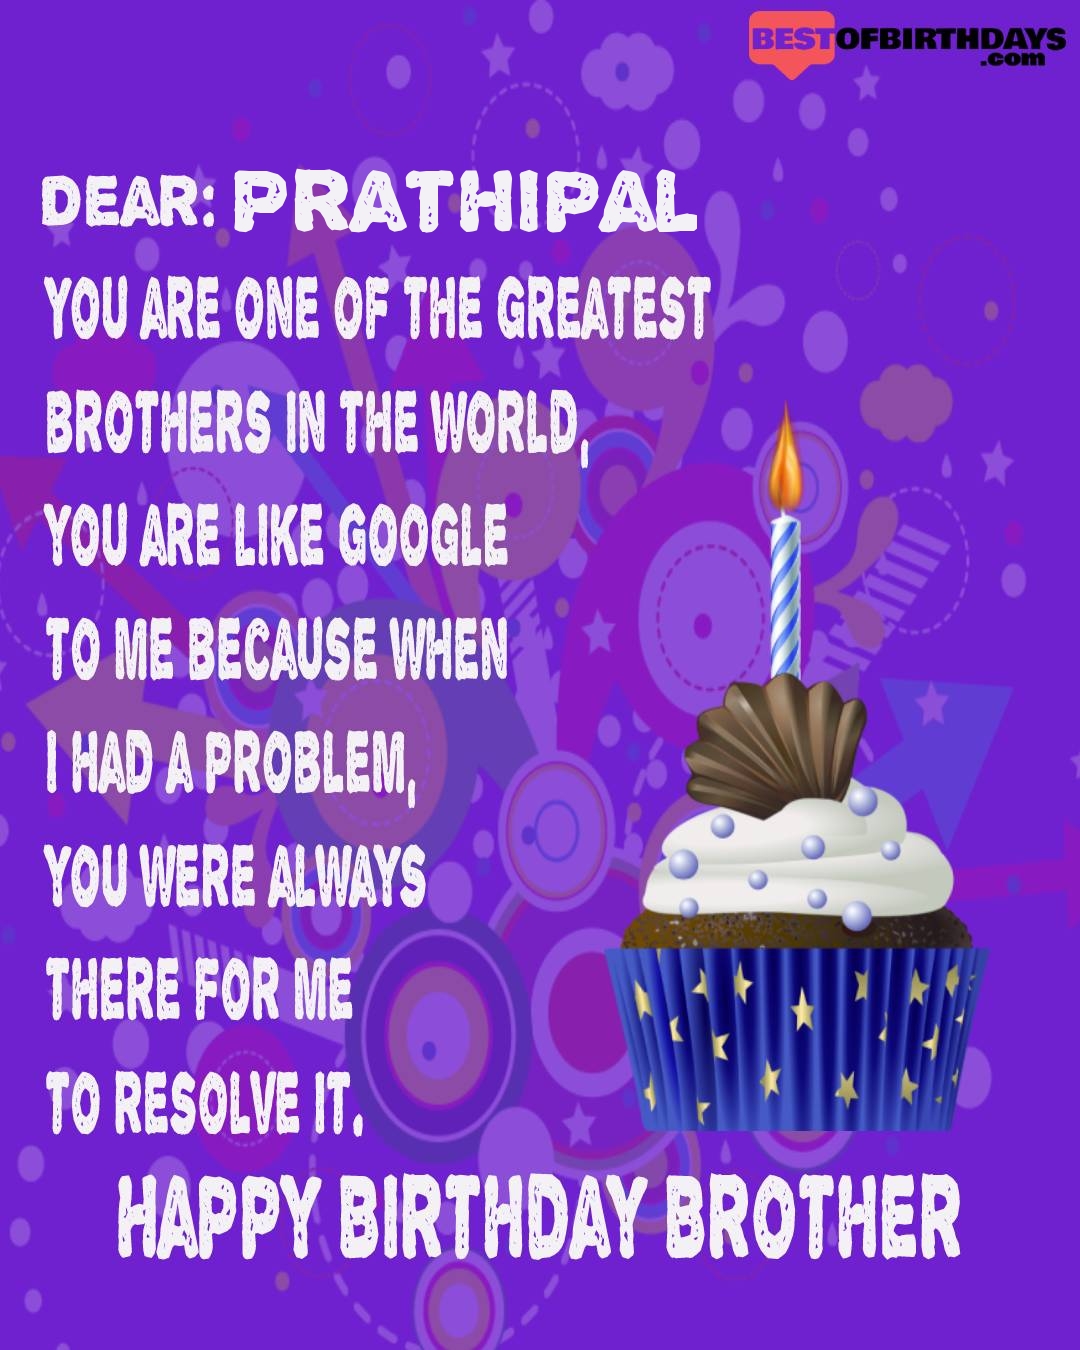 Happy birthday prathipal bhai brother bro